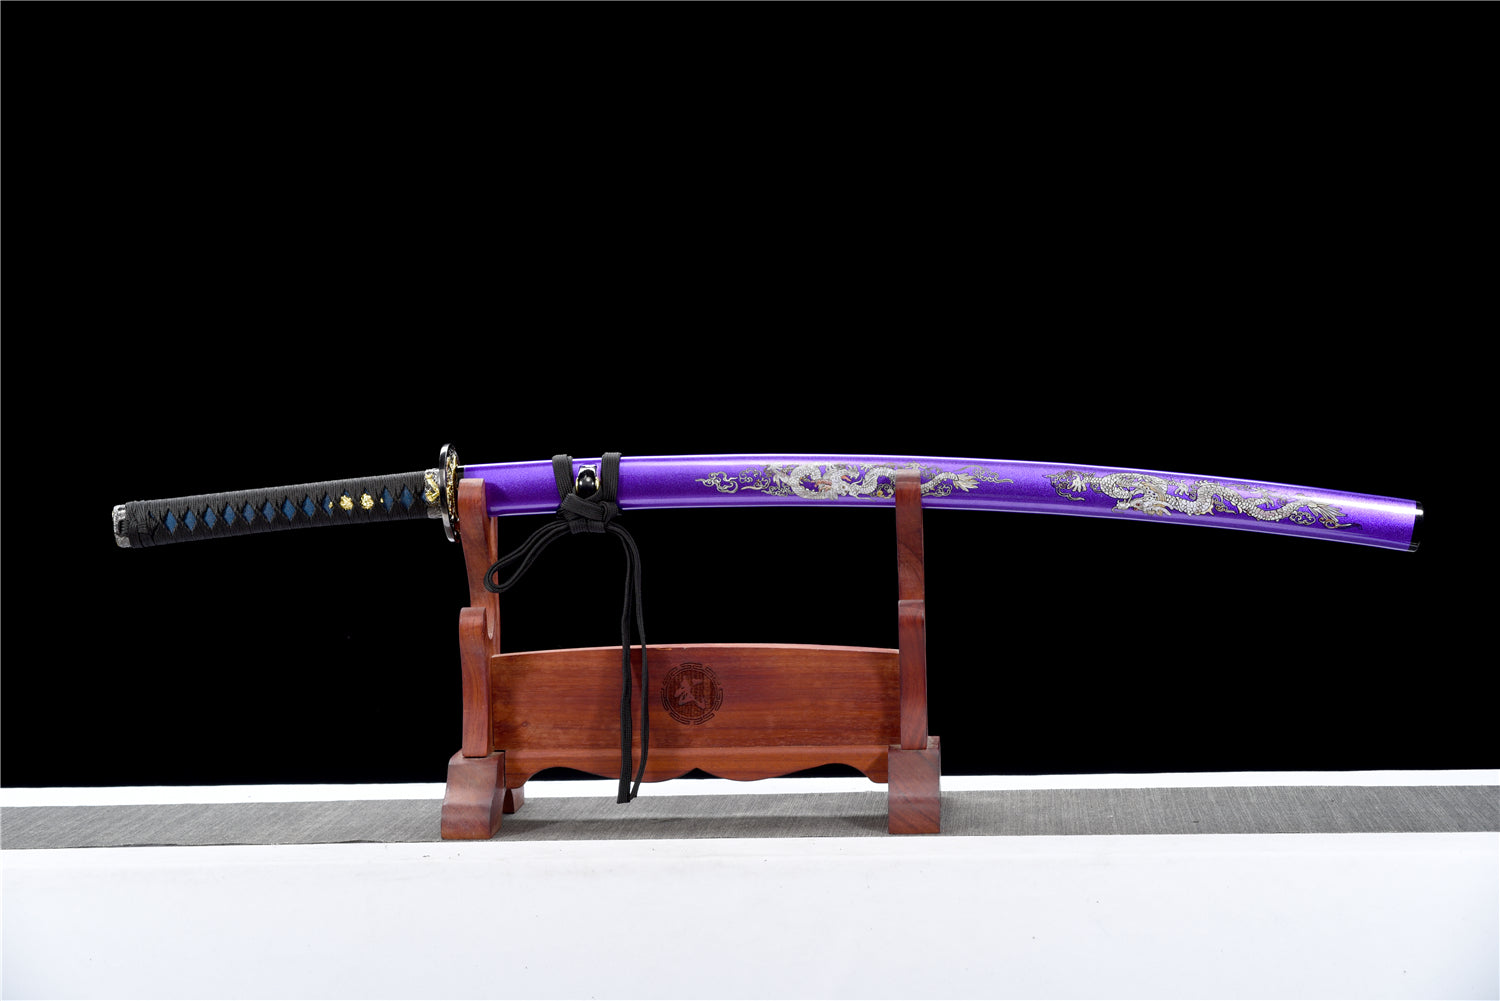 Handmade Katana Sword-Purple Glory Real Japanese Samurai Sword High-carbon steel Full Tang